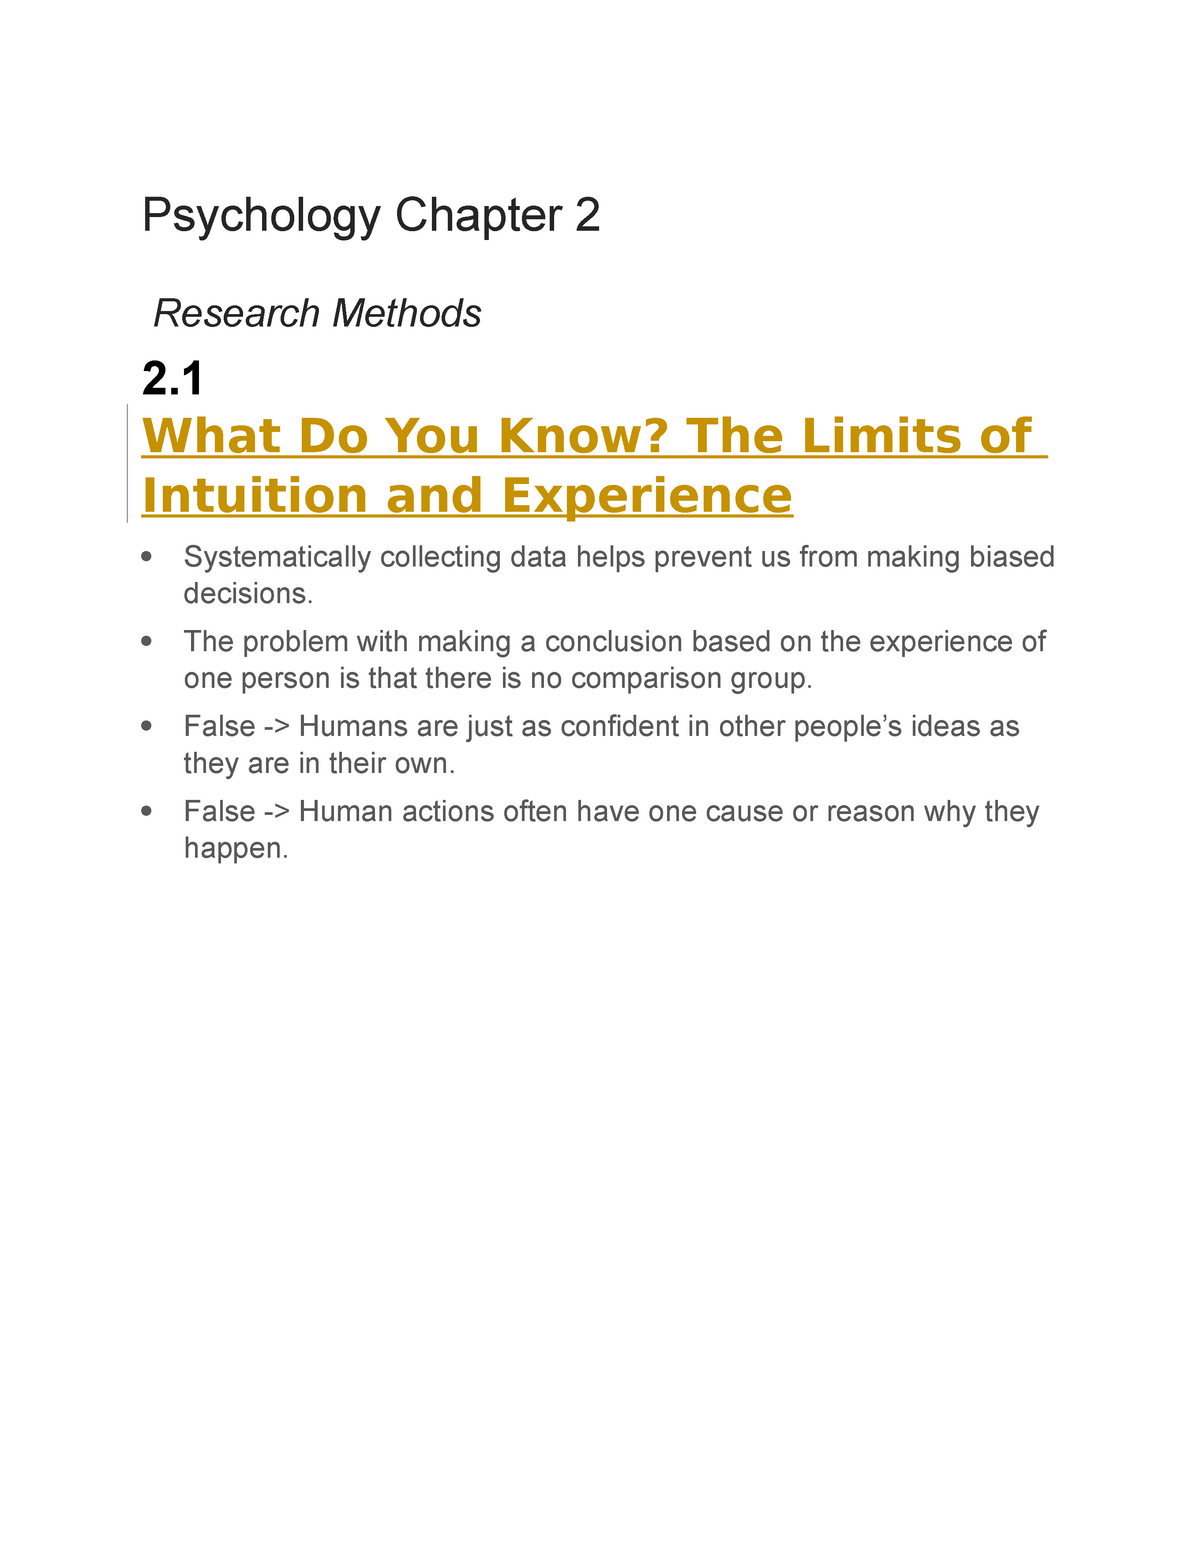 psychology chapter 2 research methods quizlet